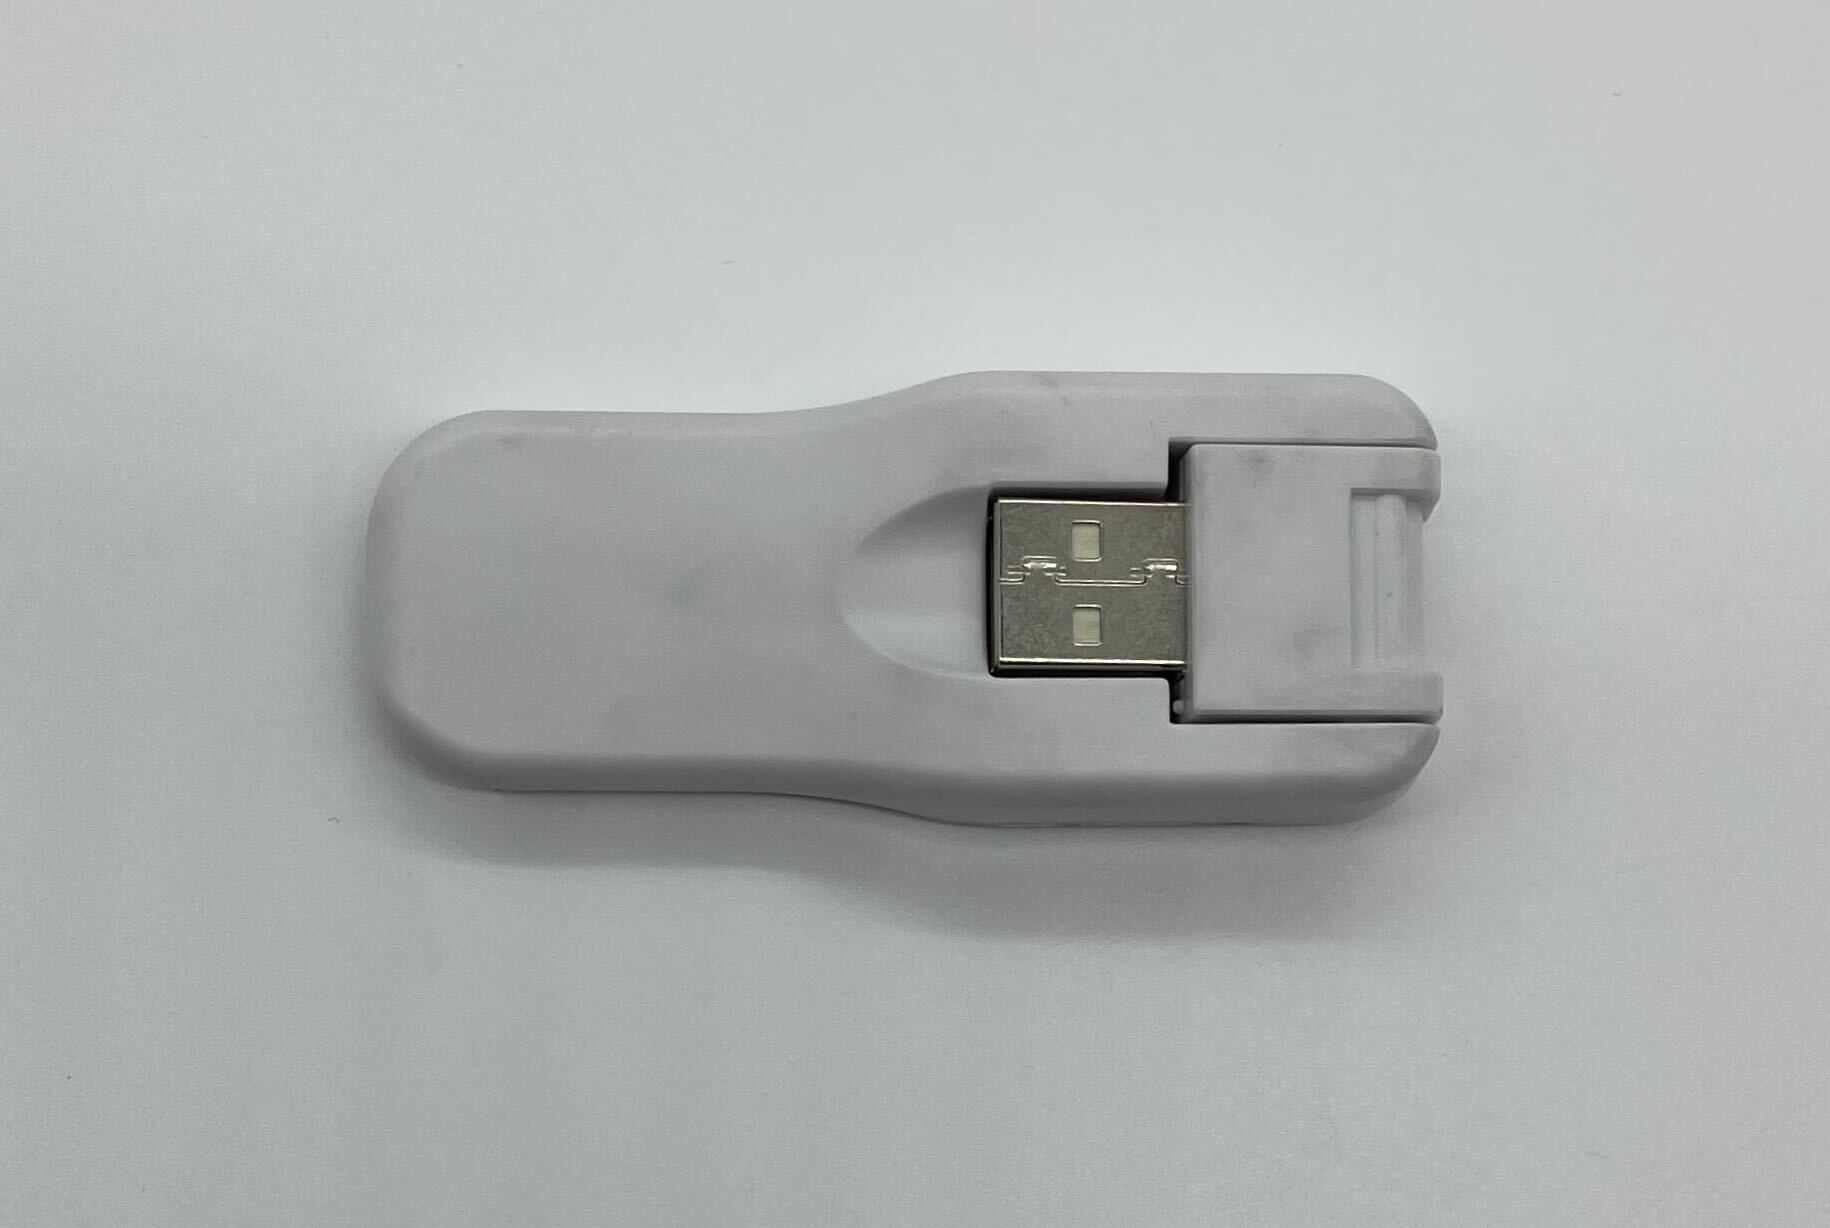 System Sensor W-USB - The Fire Alarm Supplier